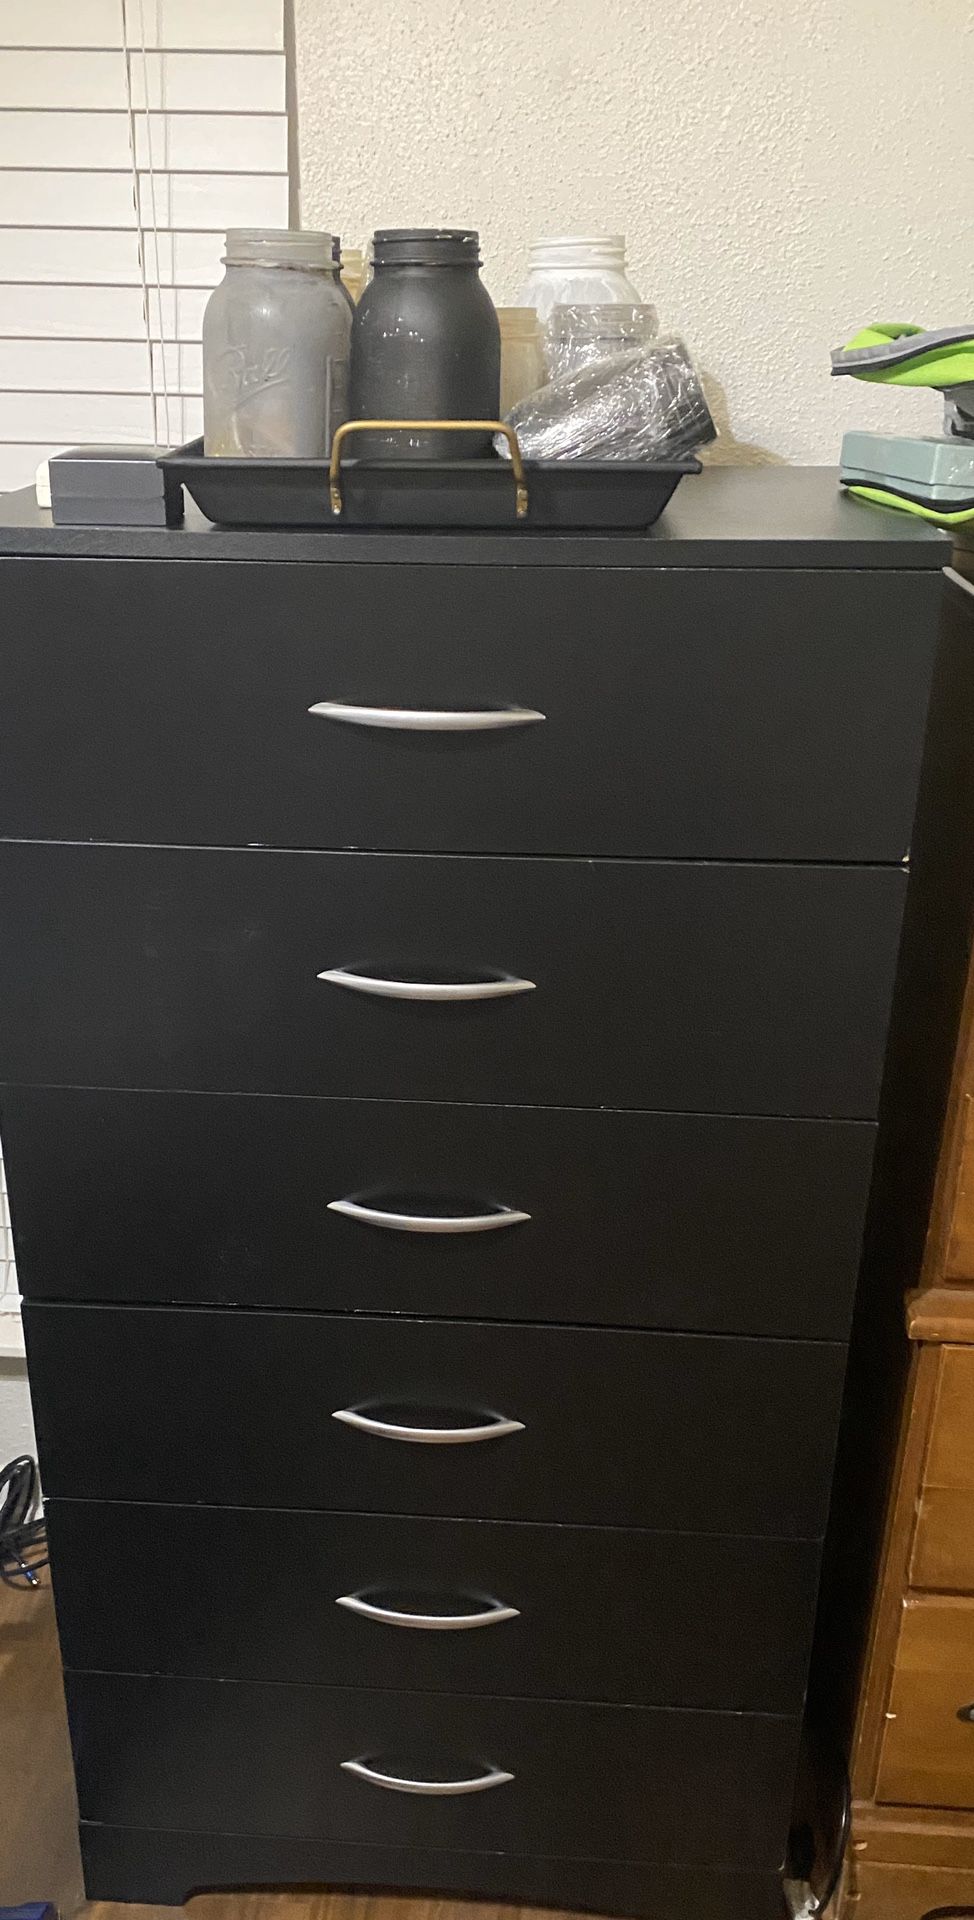 6 drawer dresser